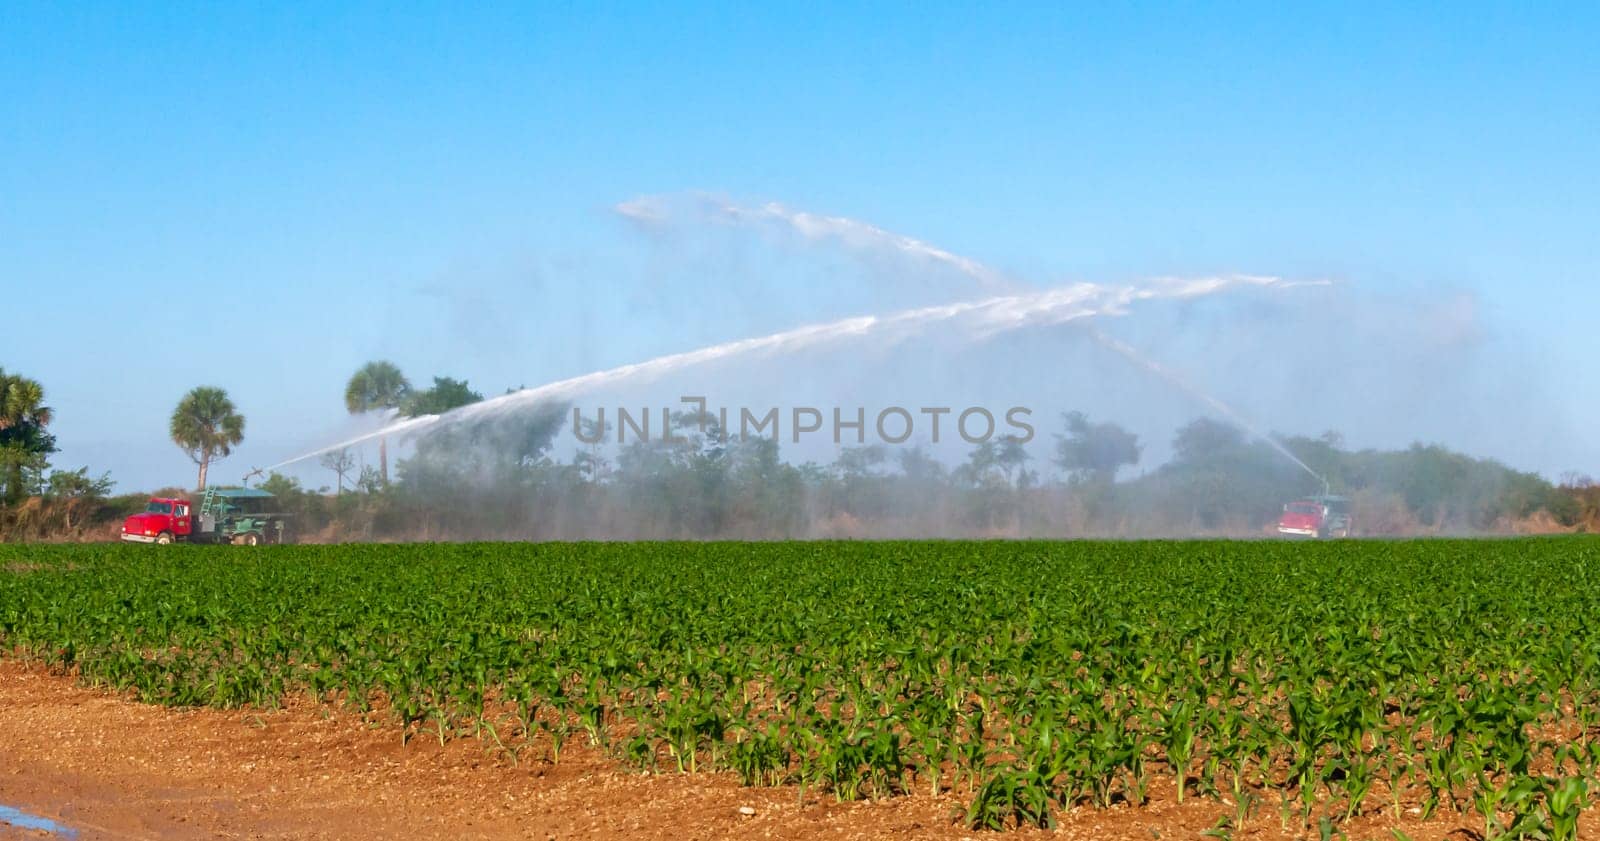 USA, FLORIDA - NOVEMBER 30, 2011: a fire truck spraying water on a field of corn, Florida